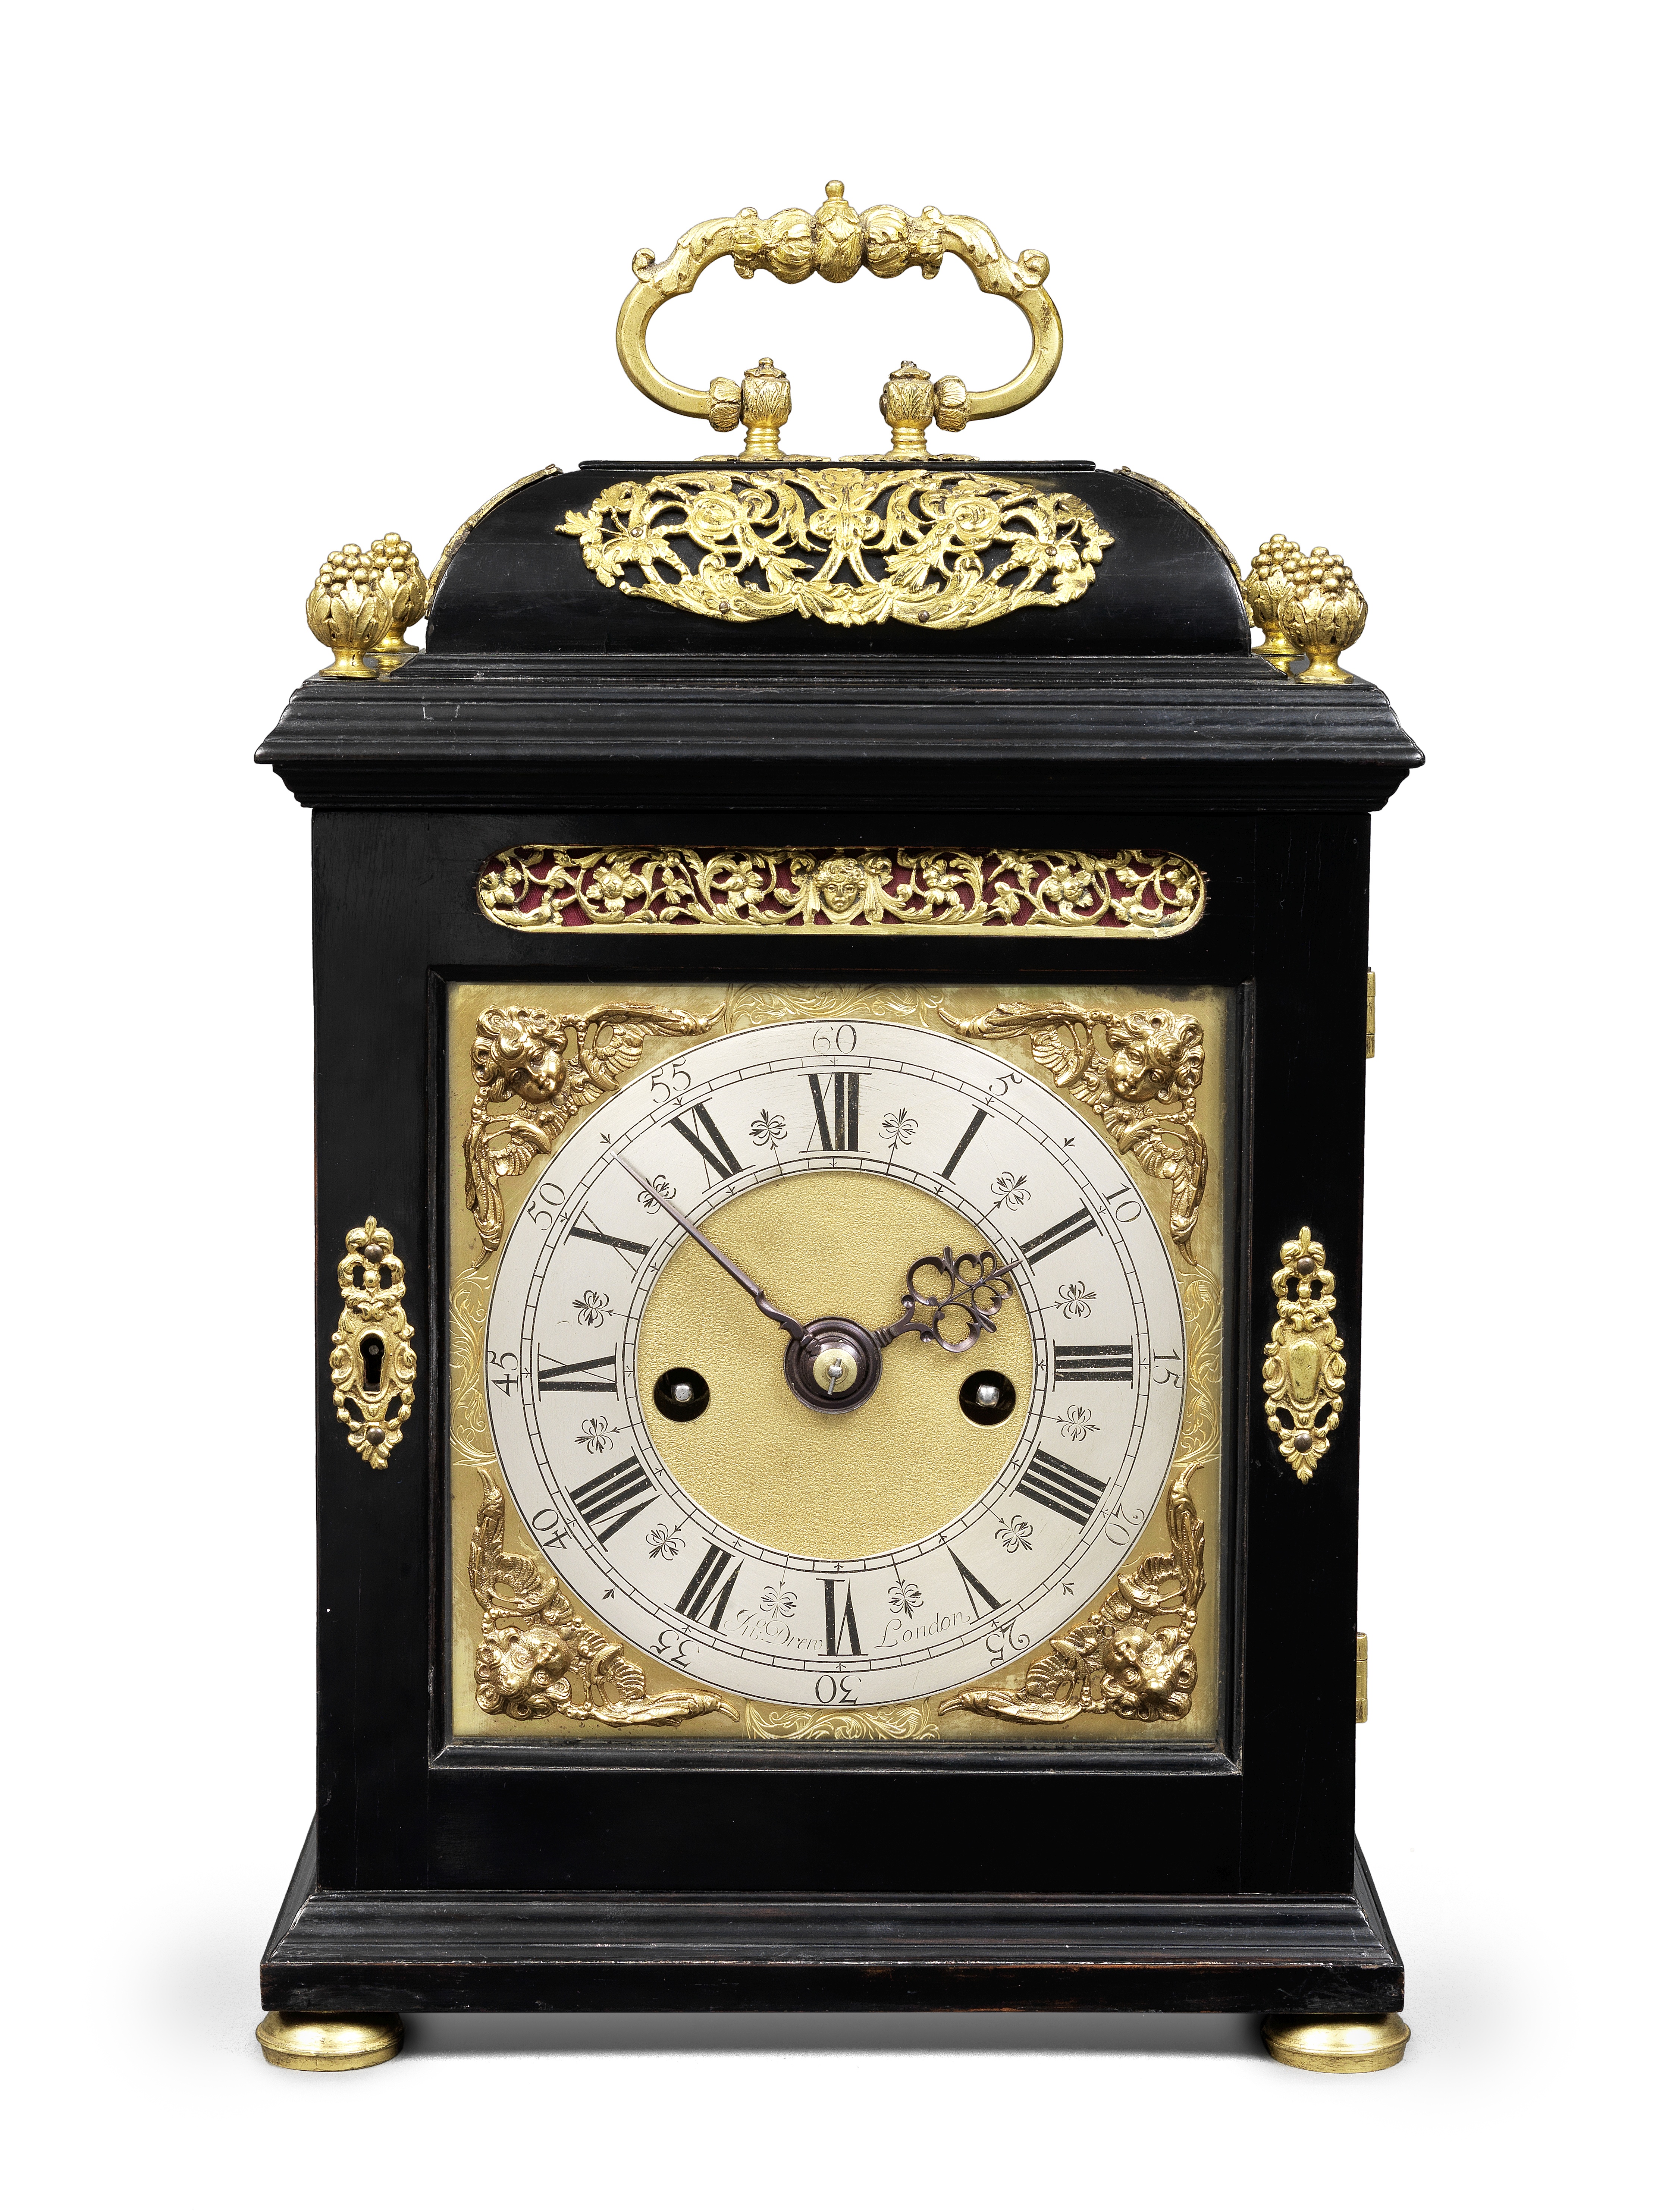 A rare late 17th Century ebony table clock by a Knibb apprentice John Drew, London